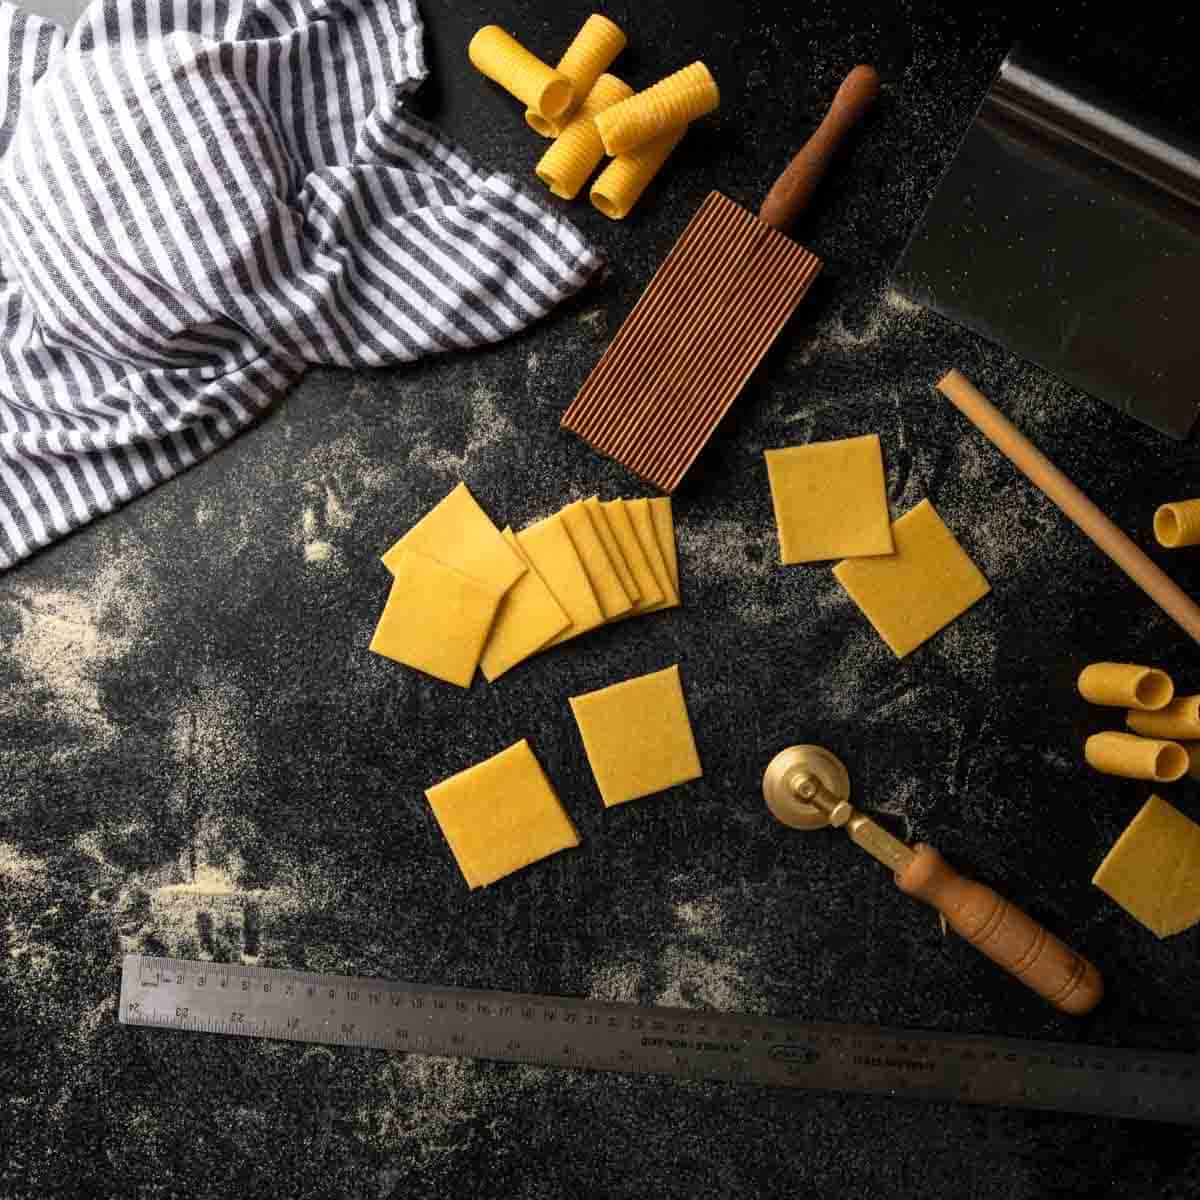 A pile of several pasta dough squares